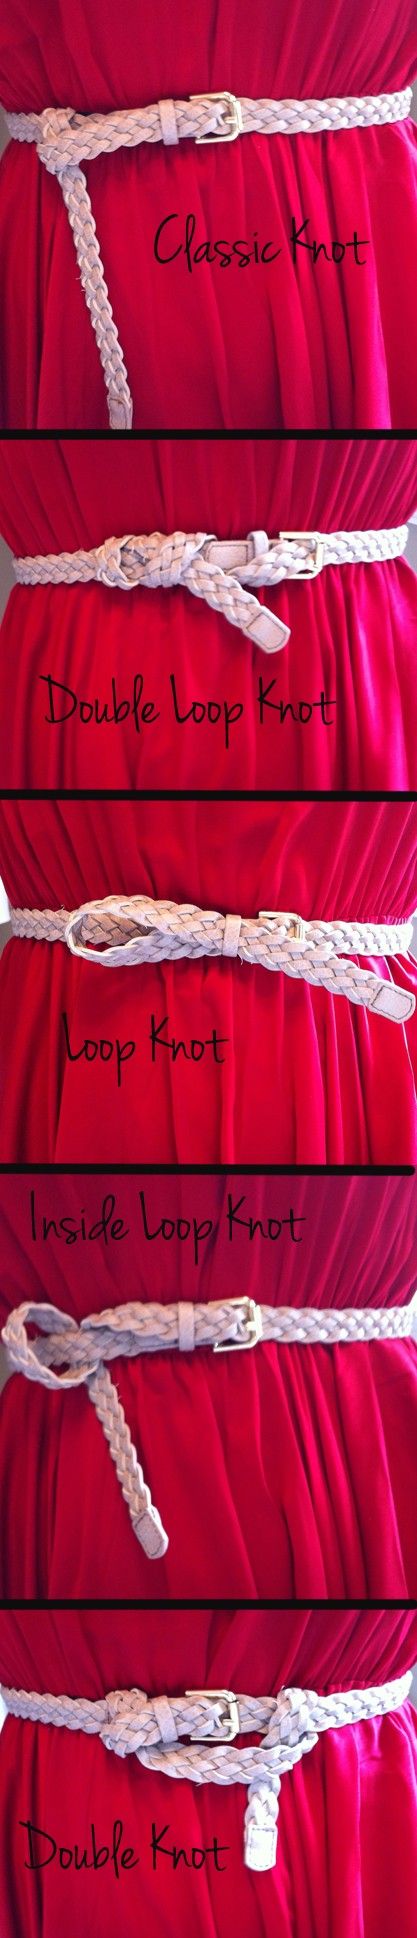 belt knots